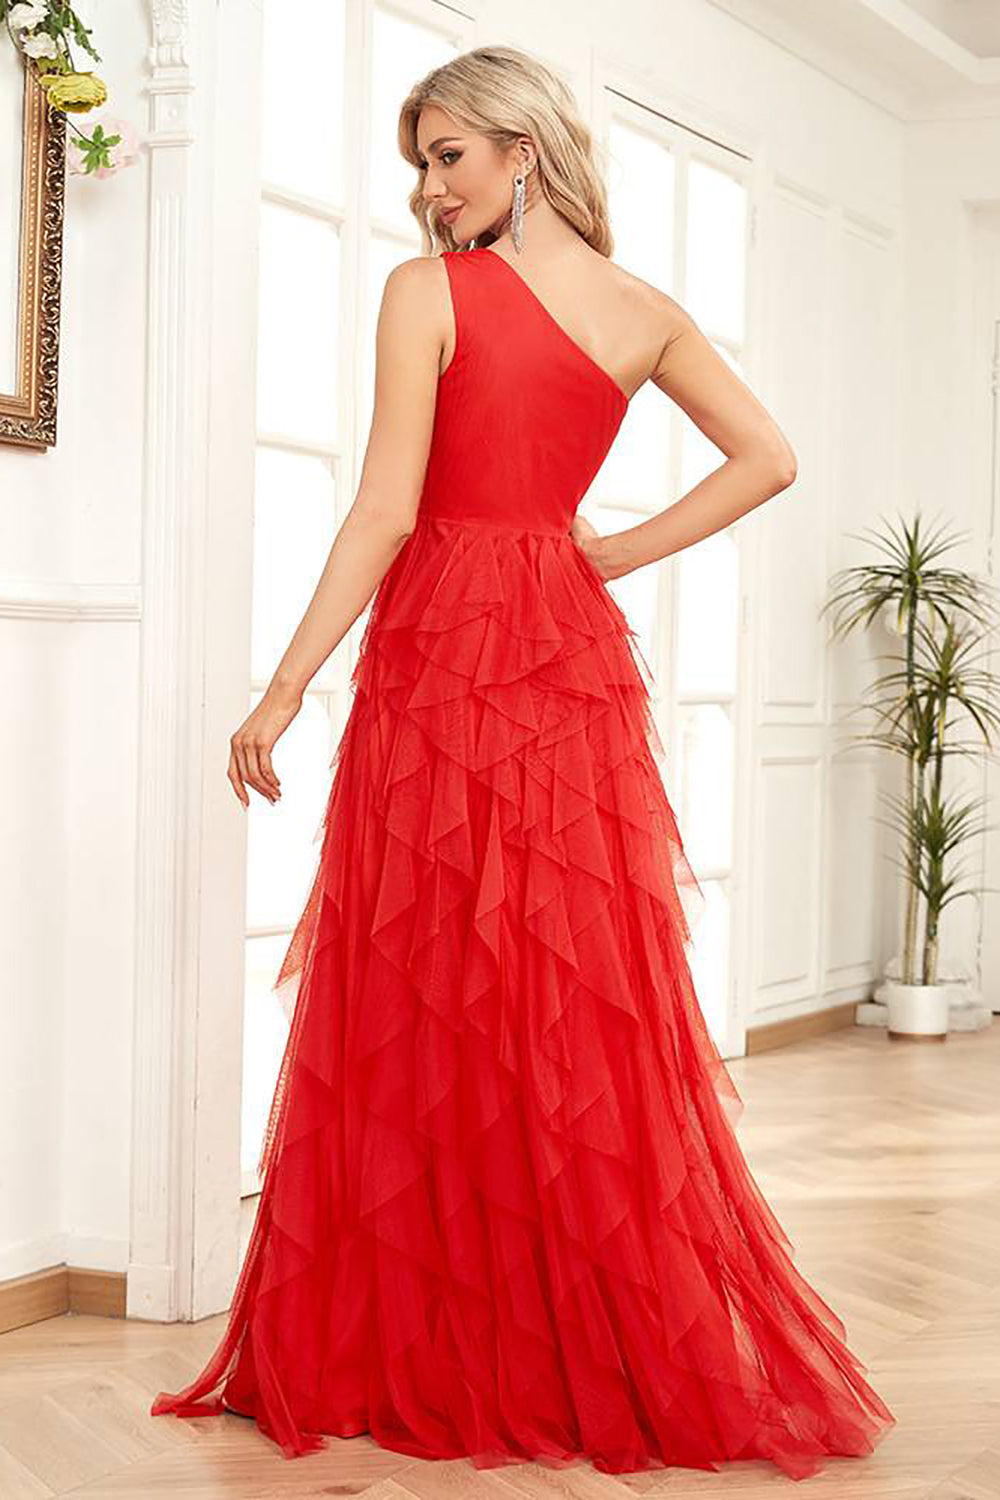 ZAPAKA Women Prom Dress One Shoulder Red Tulle A-Line Formal Dress